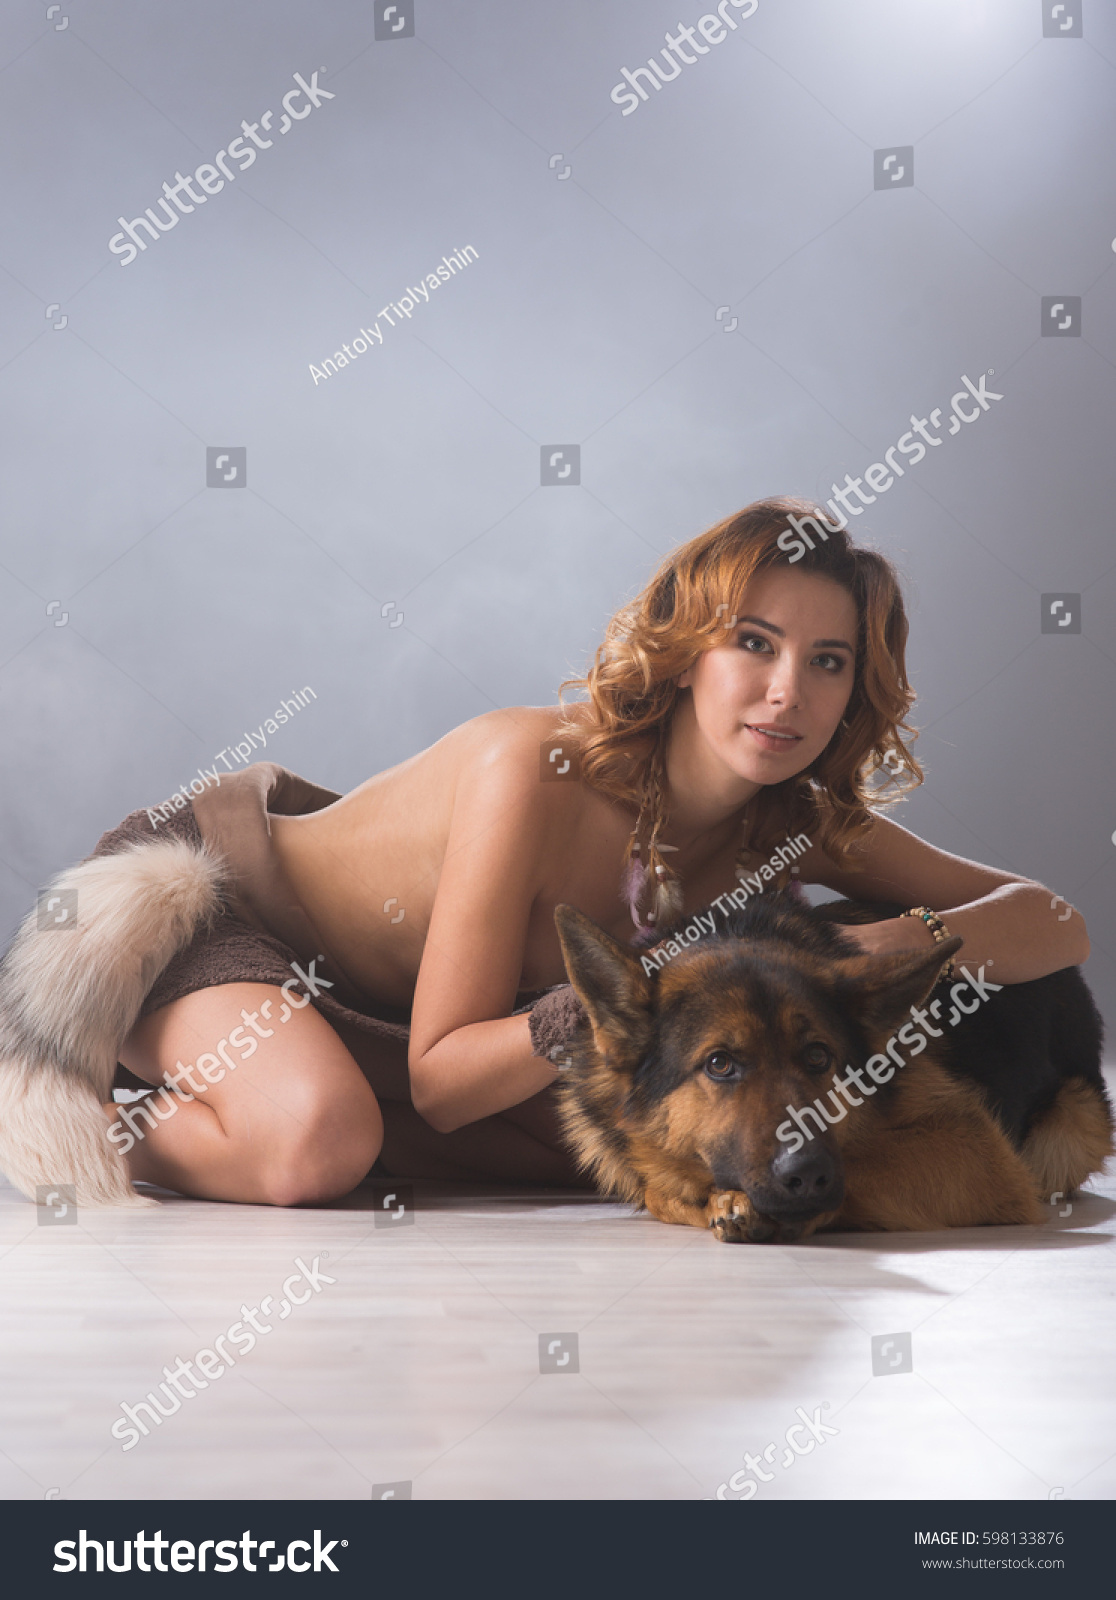 Nude dog Animal porn